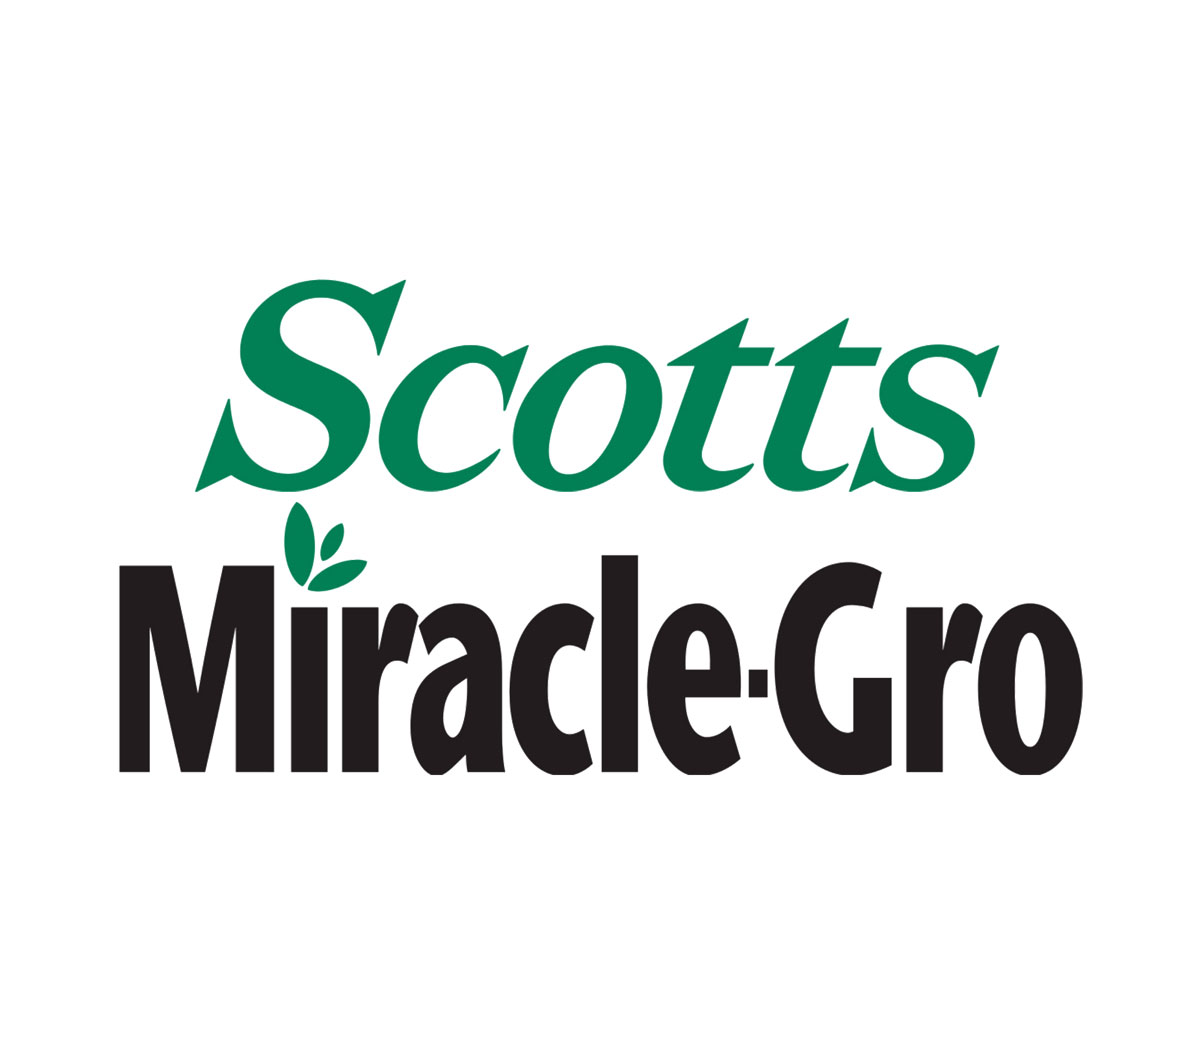 Scott's Miracle Grow